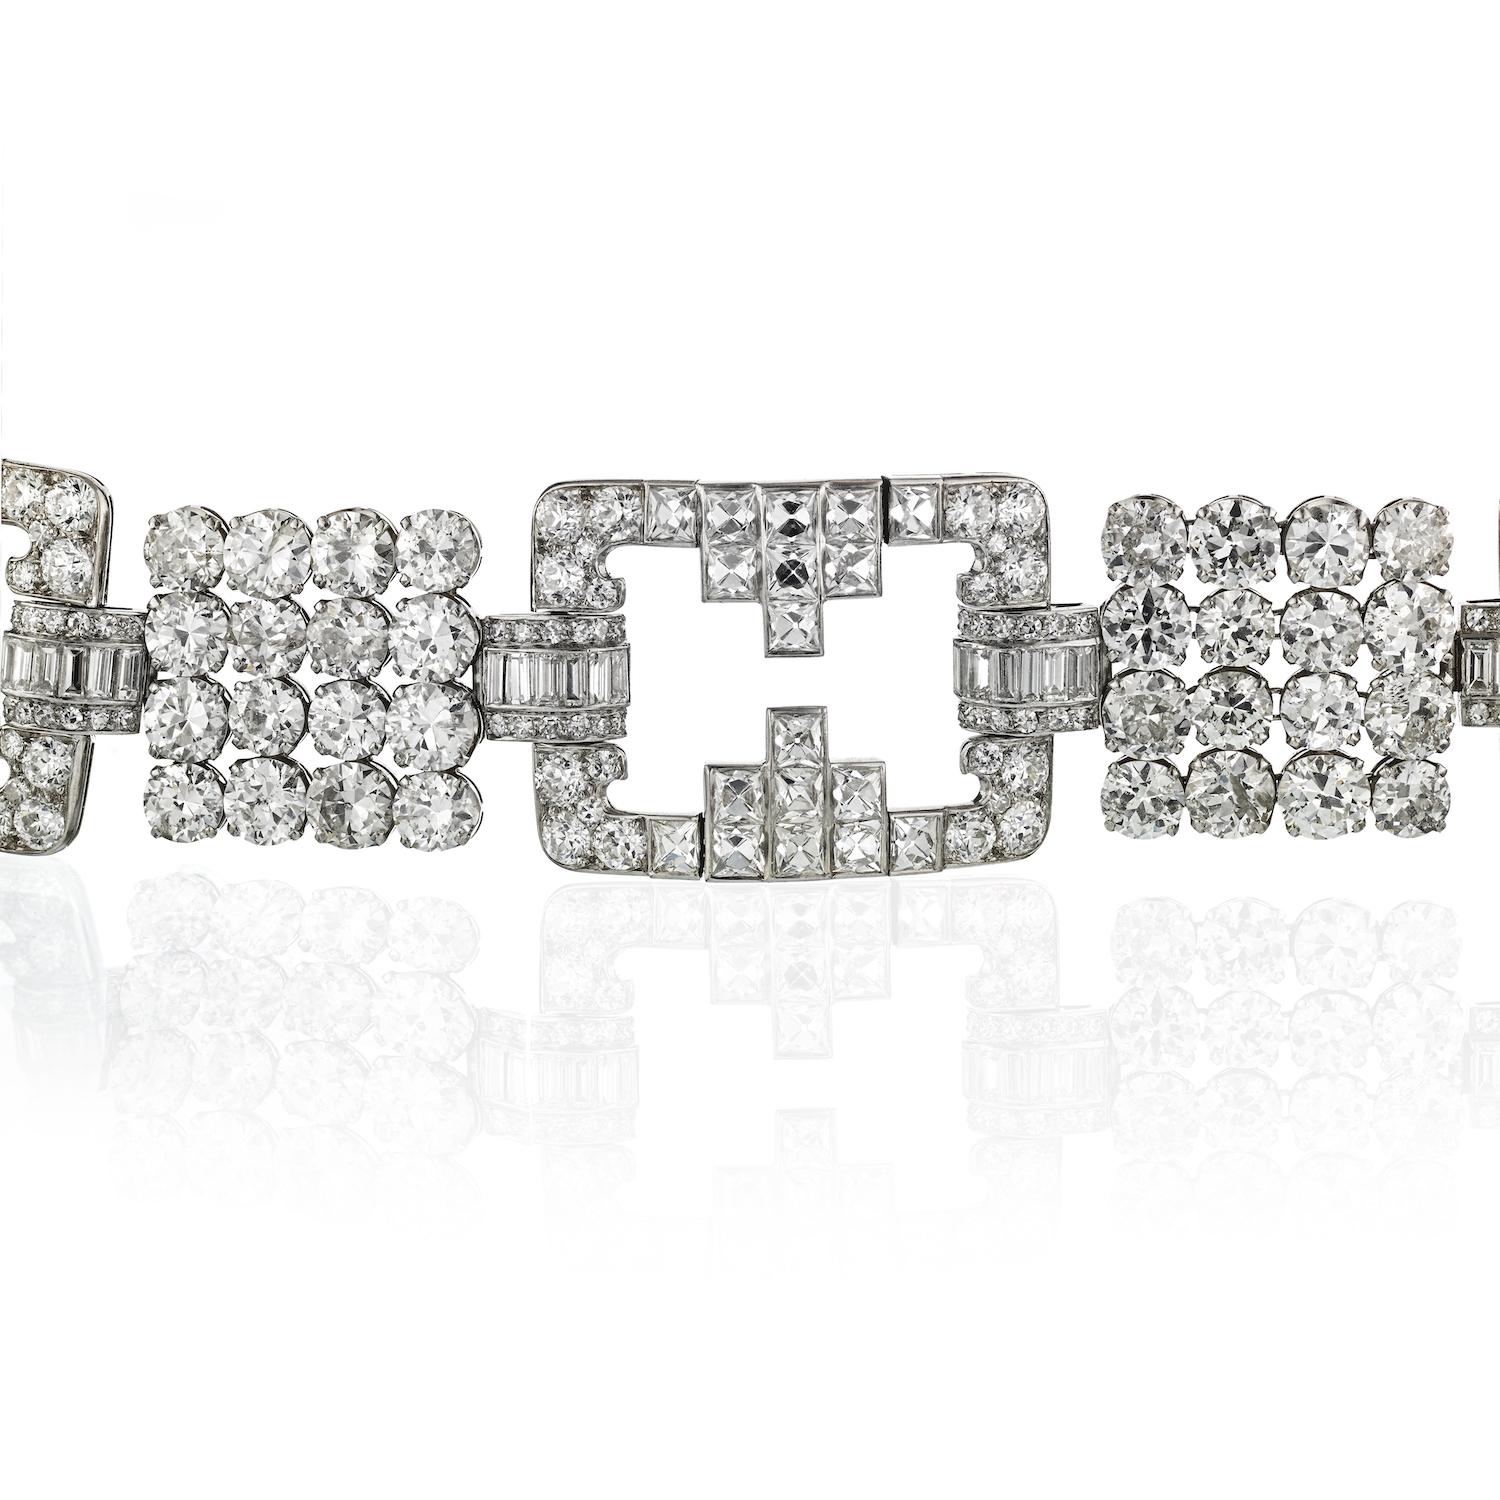 Impressive Platinum 45 Carat Diamond Estate Link Bracelet In Excellent Condition For Sale In New York, NY